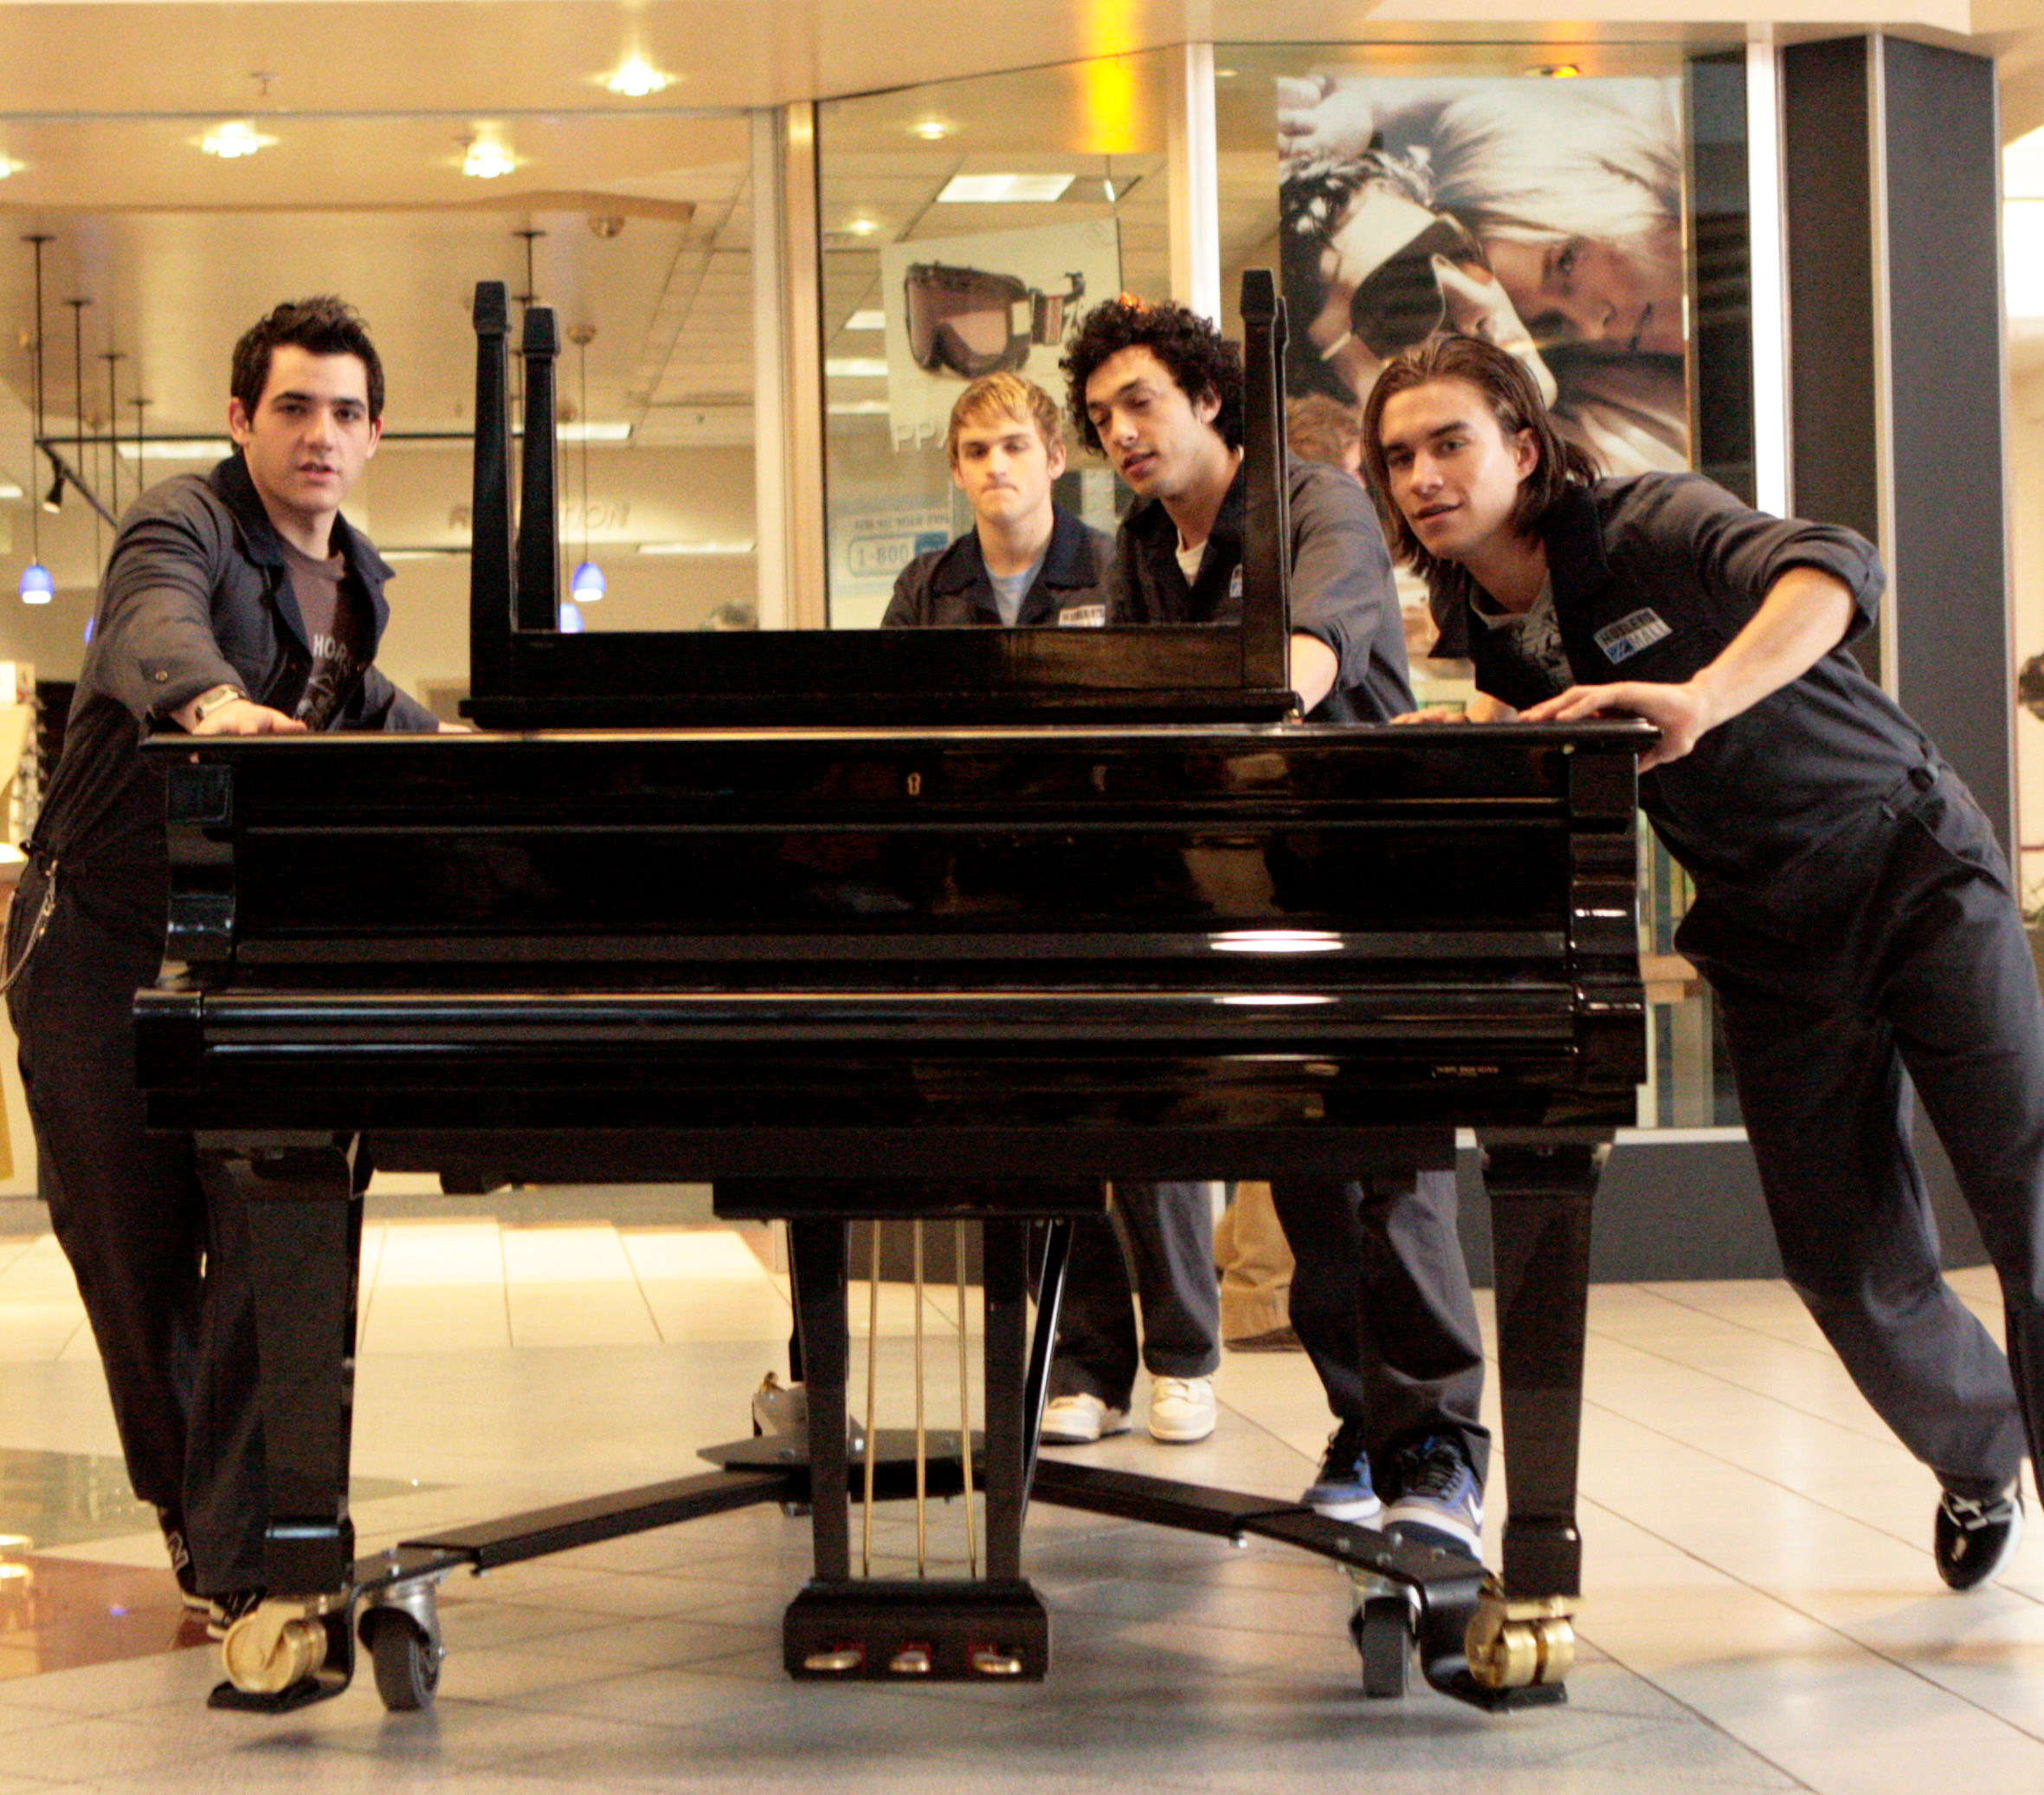 Janitors move the piano in The American Mall (2008)